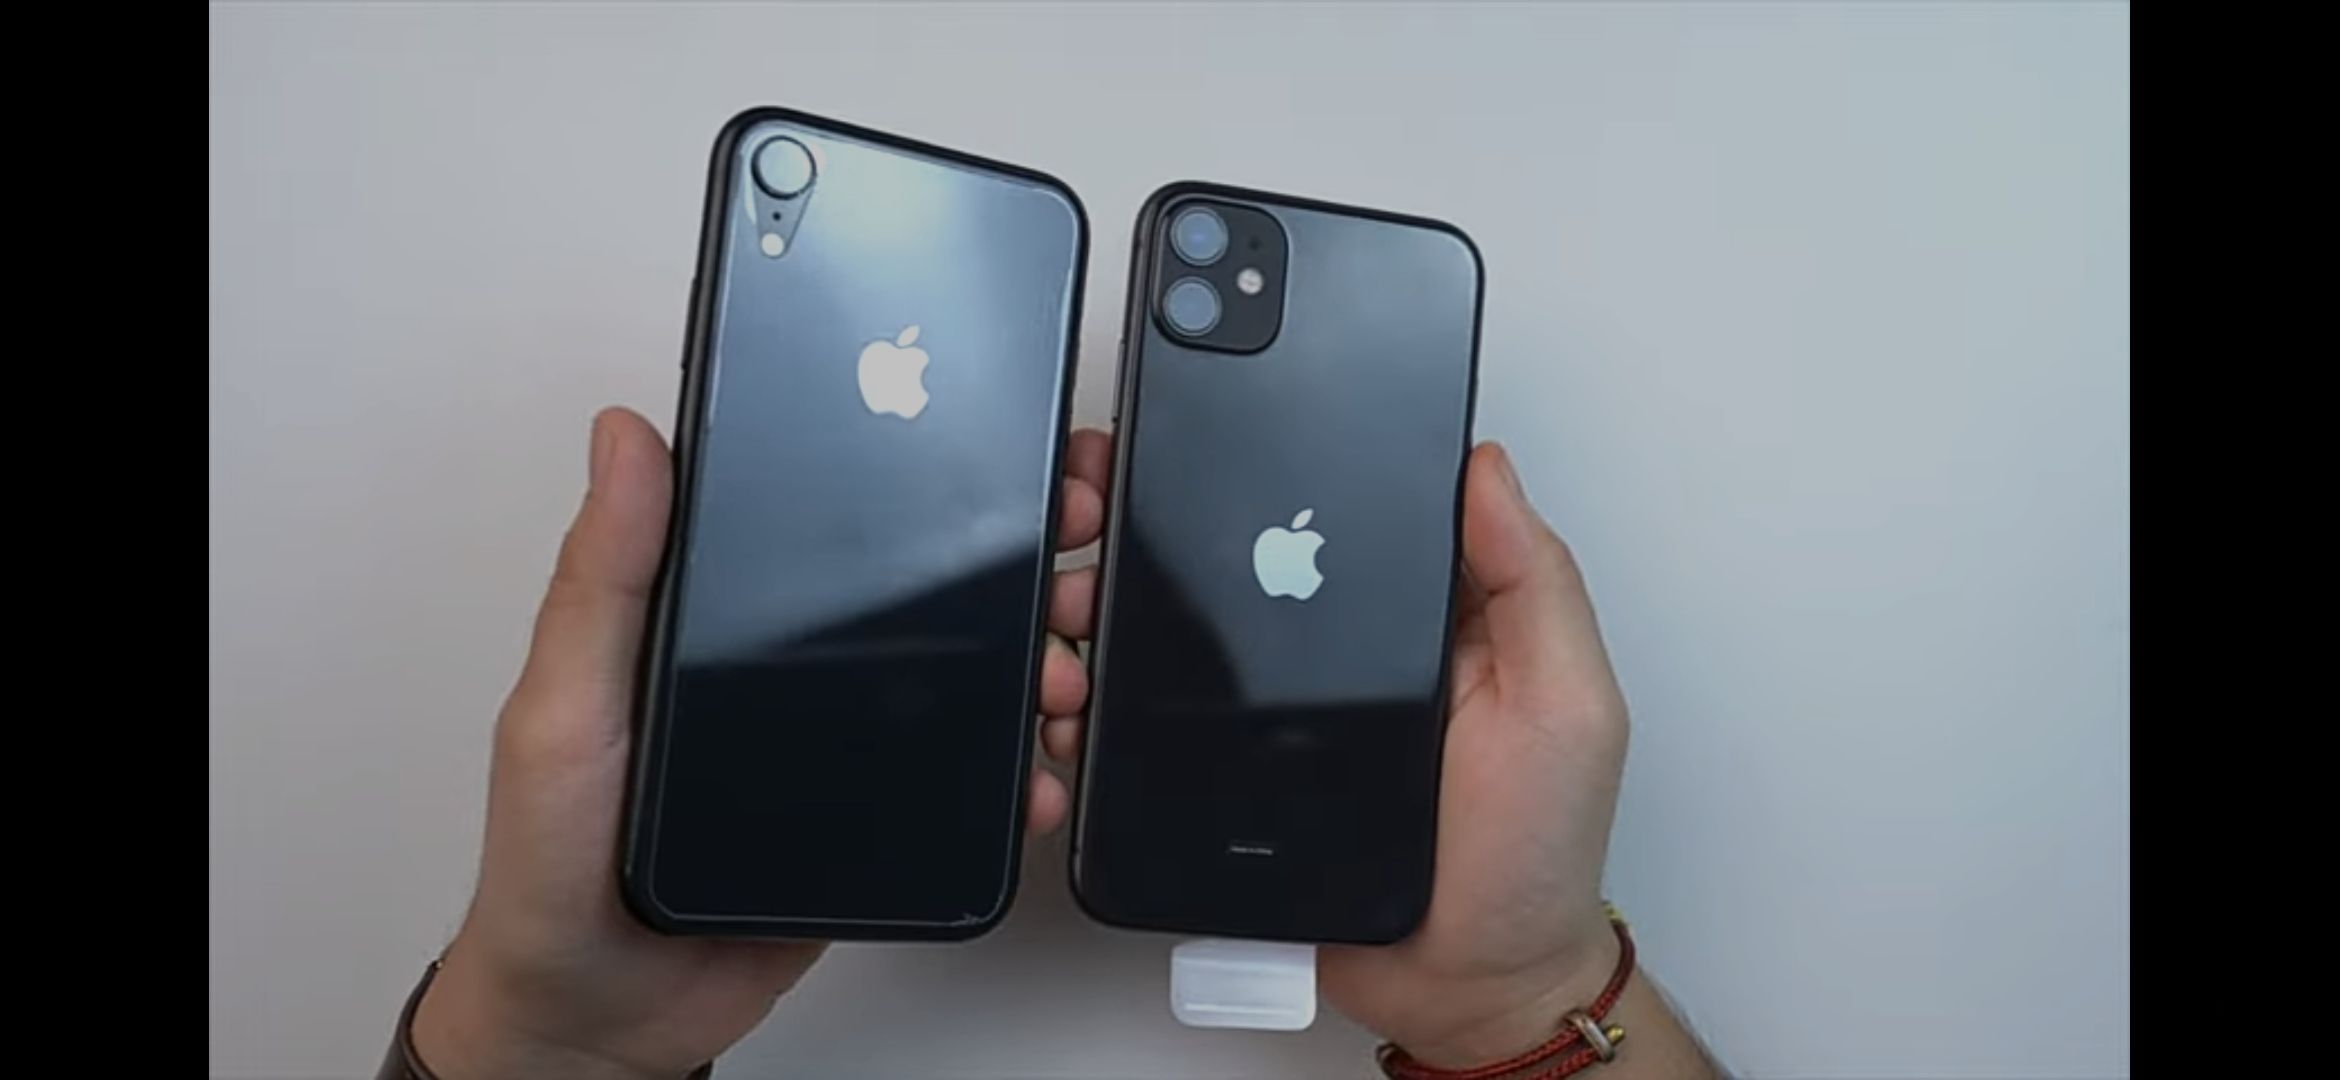 Berapa harga iPhone XR, iPhone SE, dan iPhone 11? Berikut rinciannya.